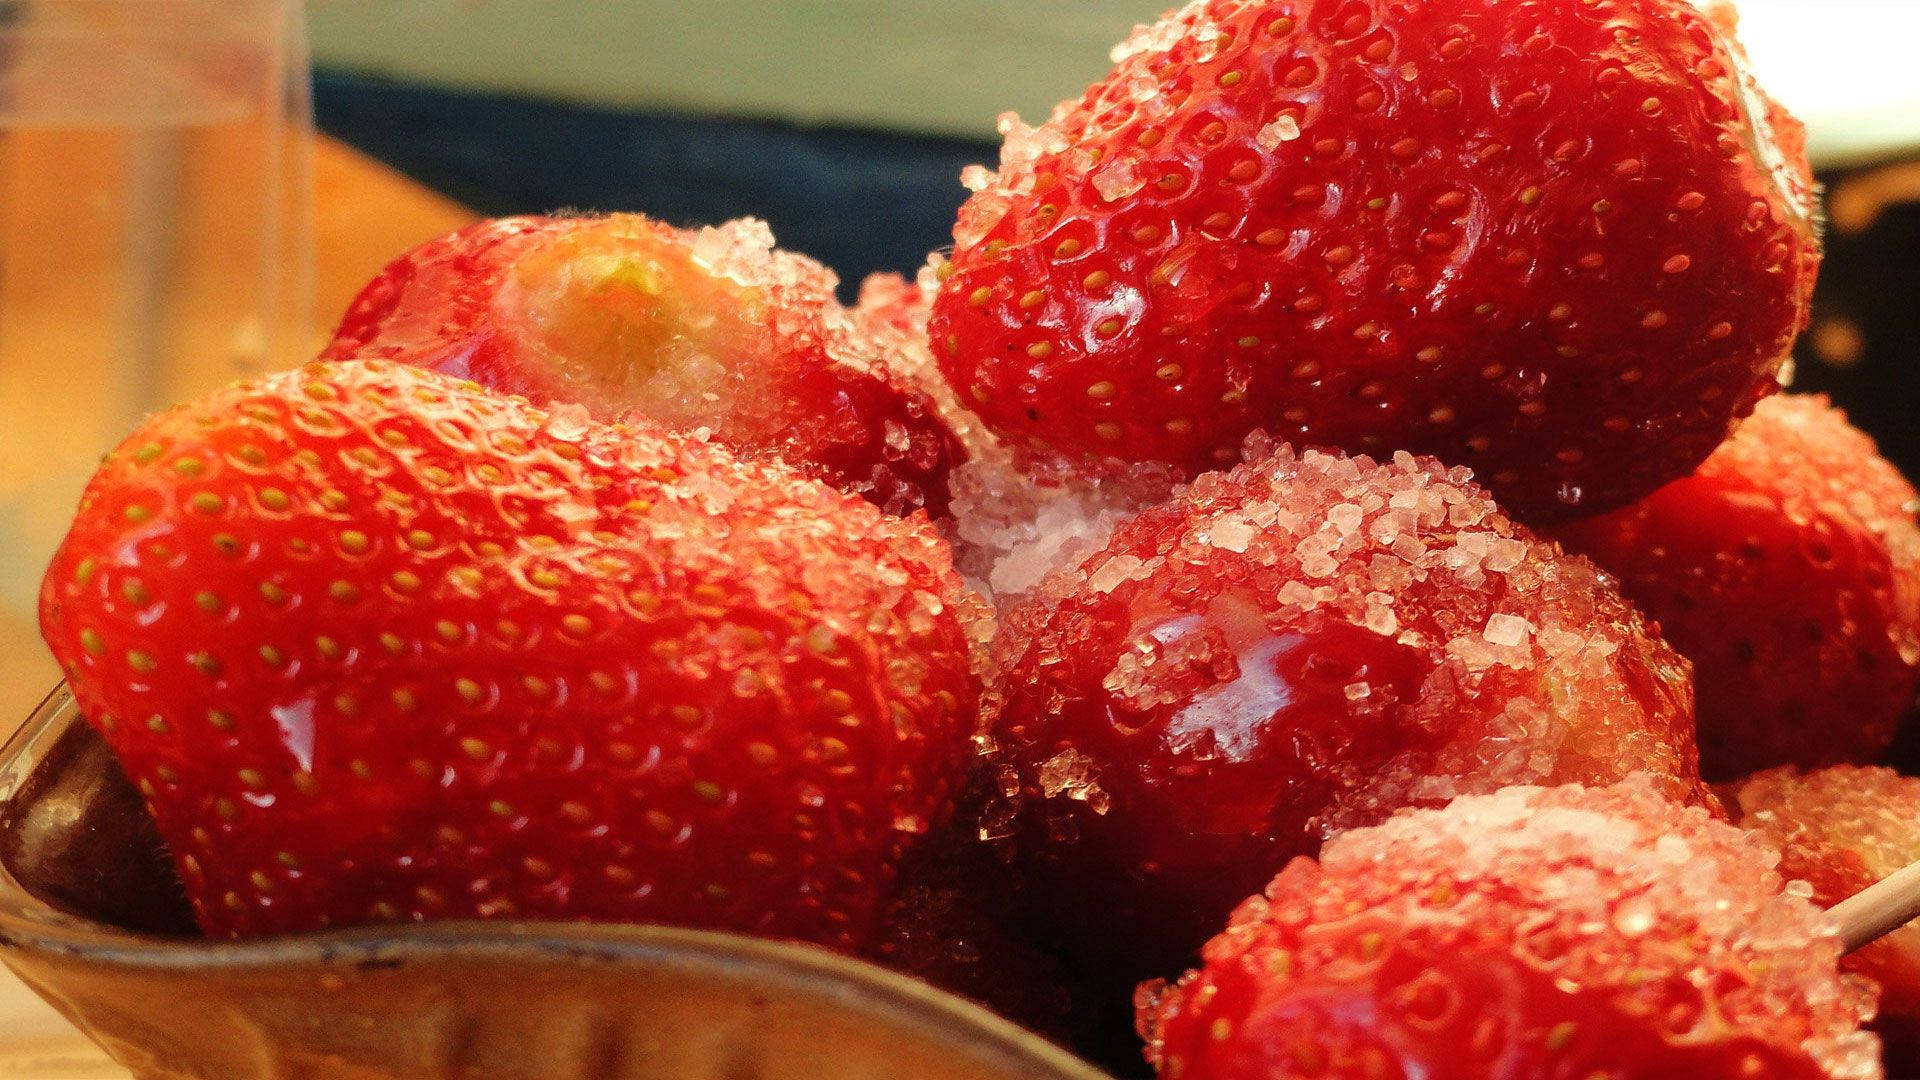 "Fresh Berries Coated in Sugar" Wallpaper